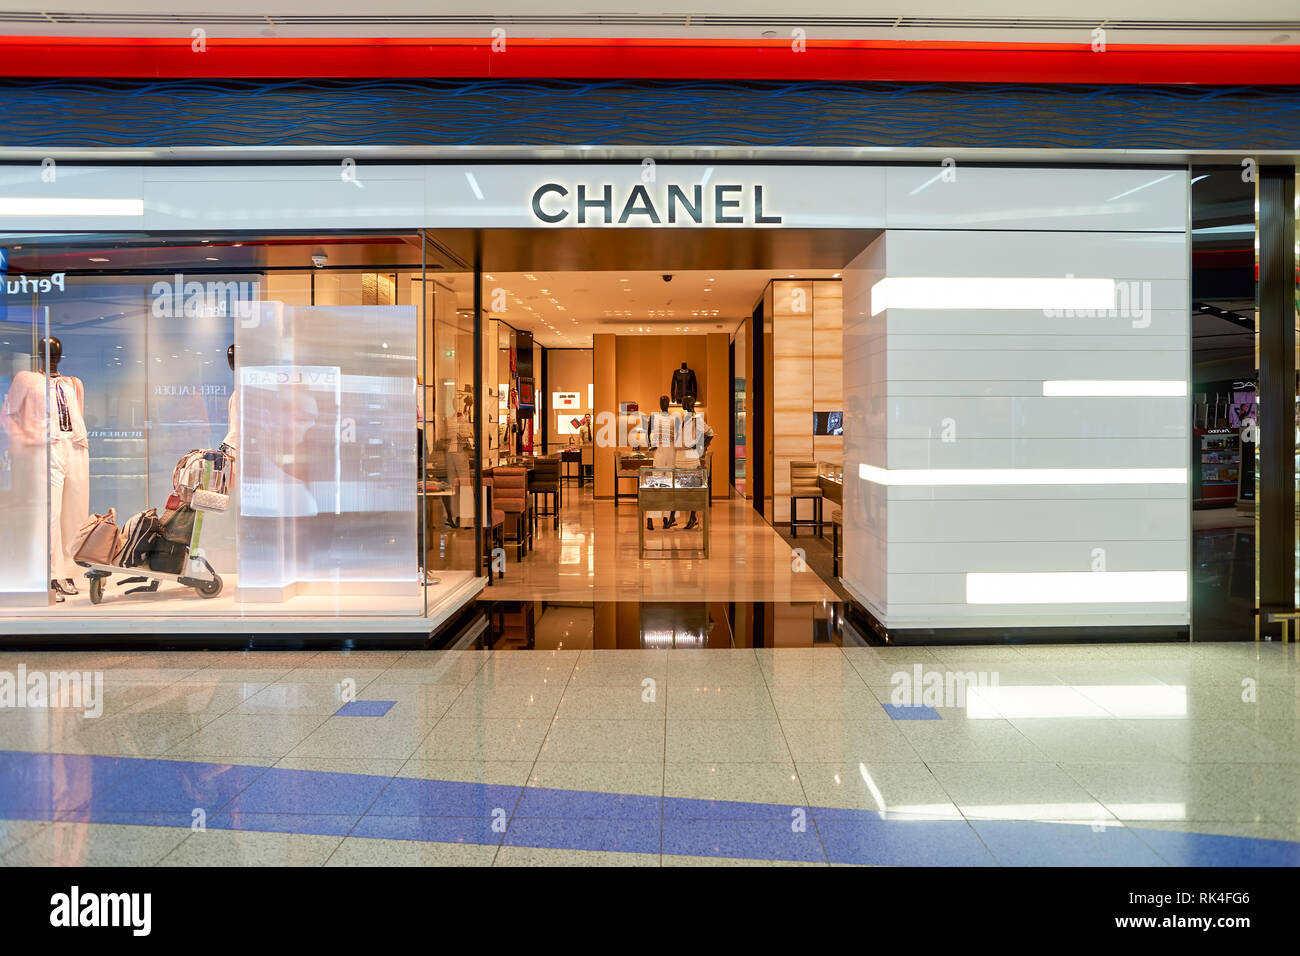 DUBAI, UAE - APRIL 08, 2016: Chanel store at Dubai International Airport.  Dubai International Airport is the primary airport serving Dubai, United Ara  Stock Photo - Alamy